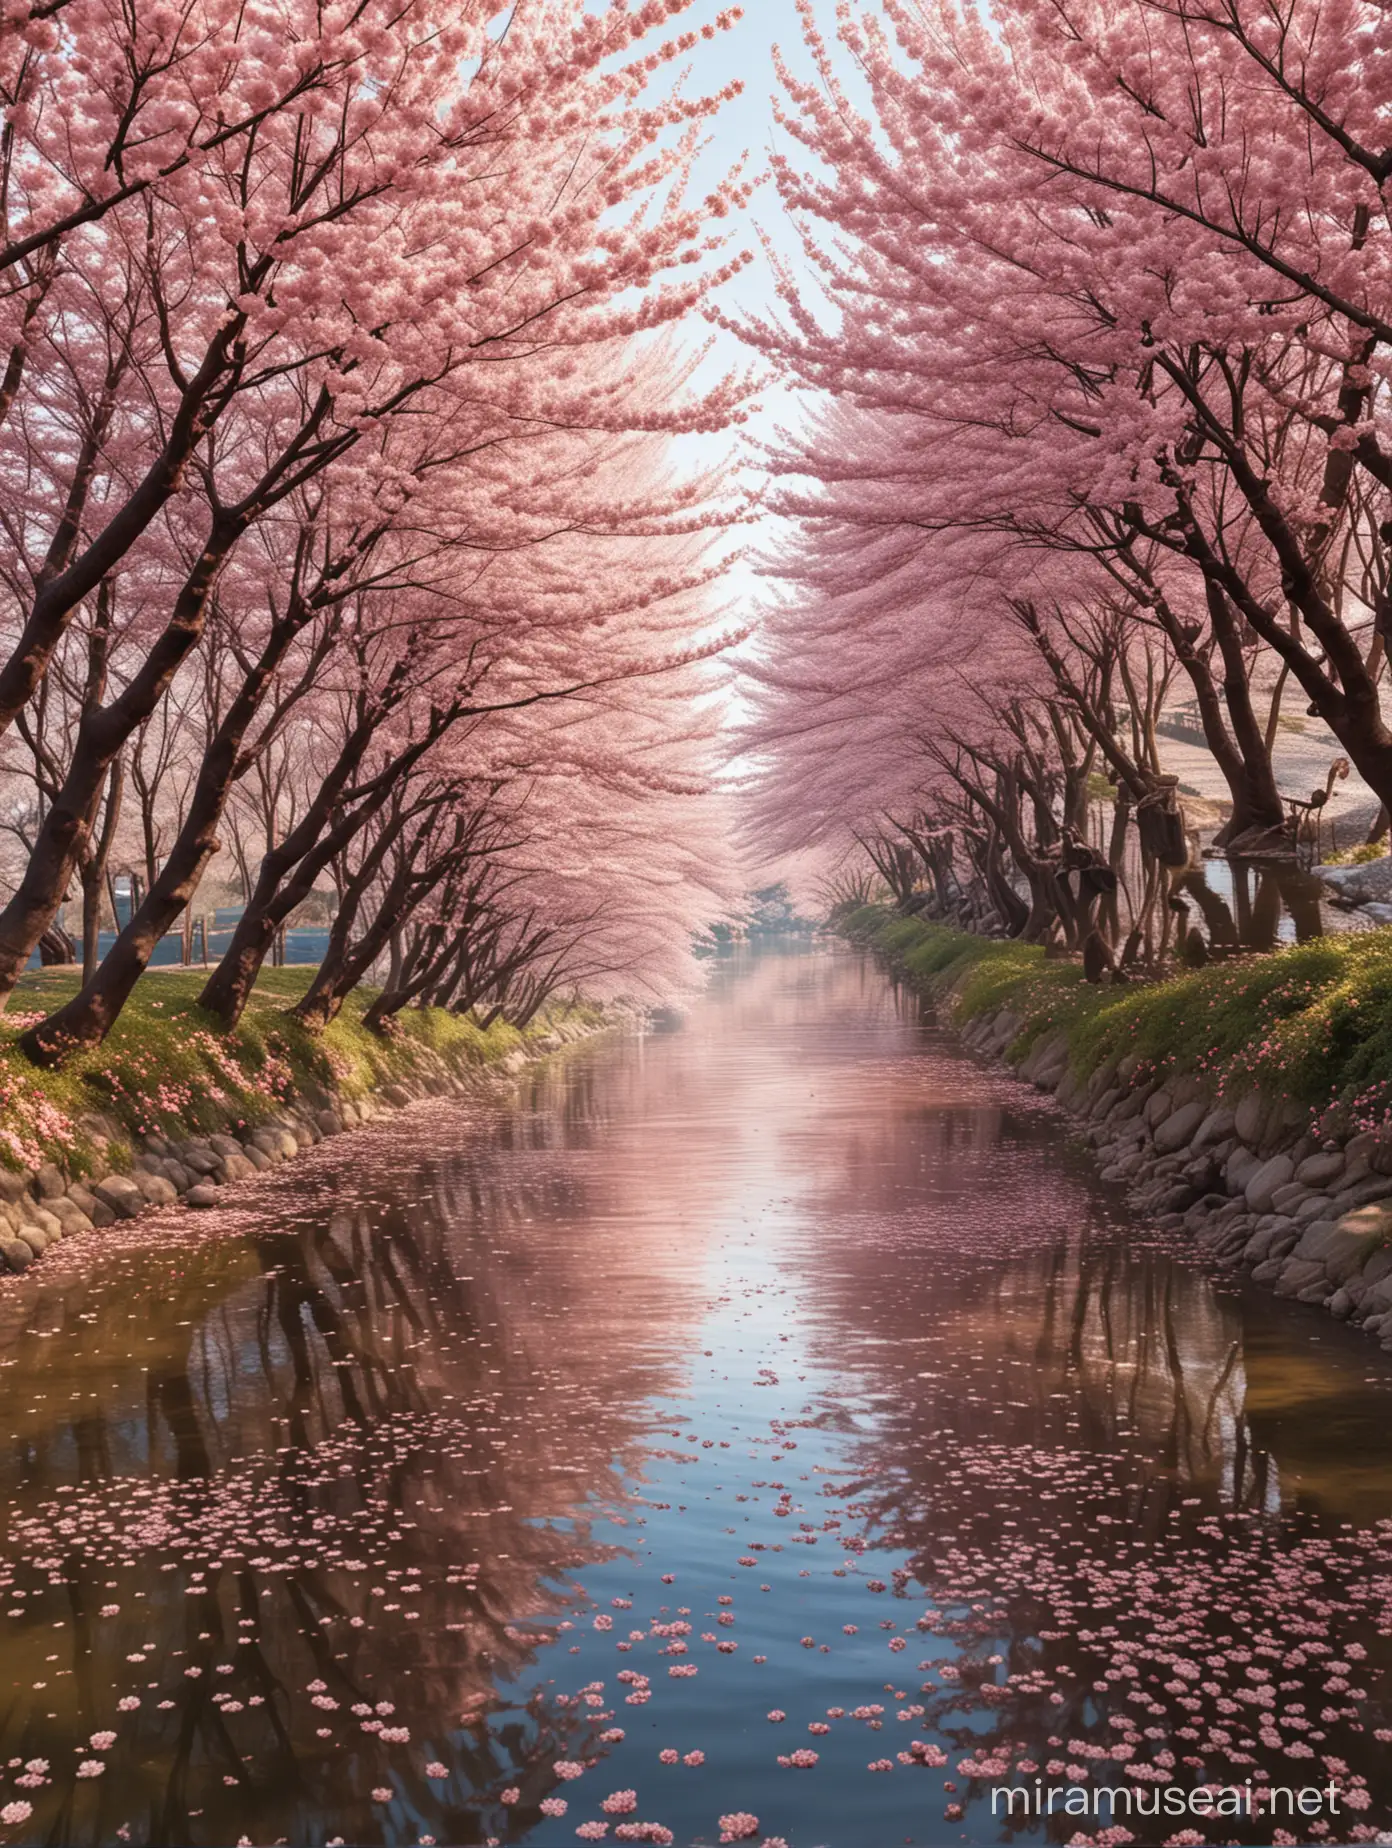 Enchanting Cherry Blossom River Scene with Sunlight Filtering Through Petals